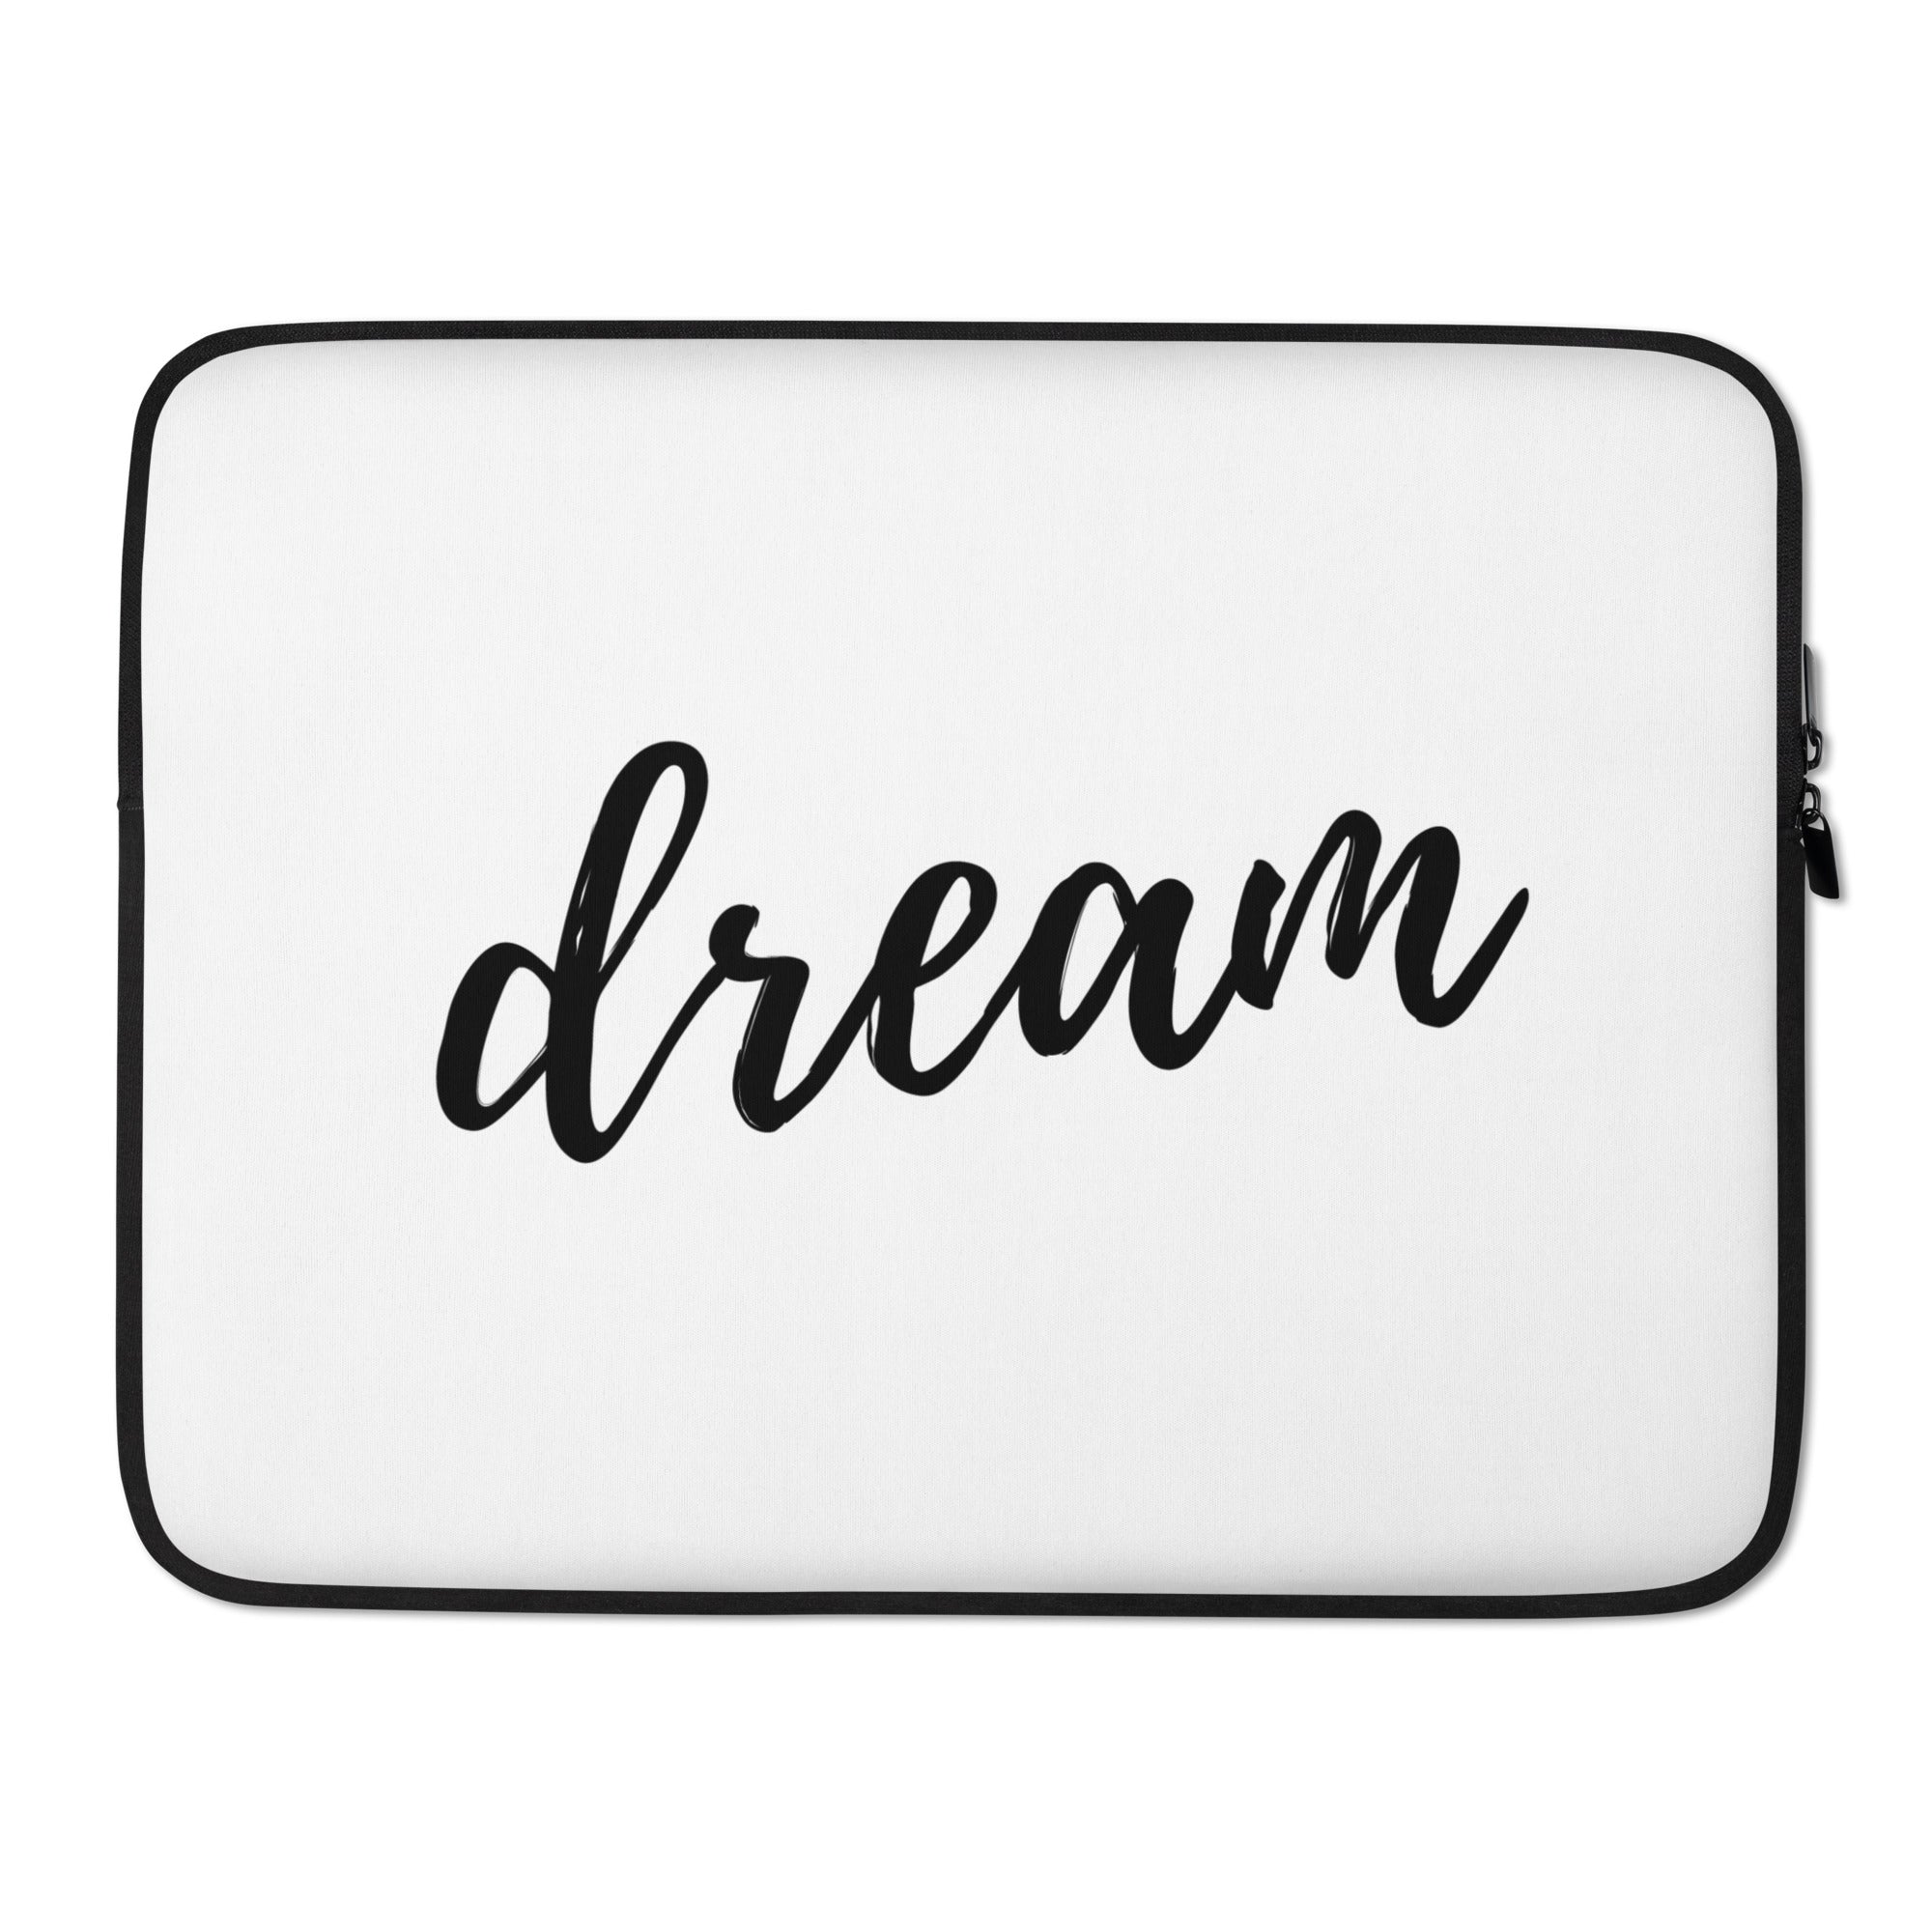 Dream - Laptop Sleeve